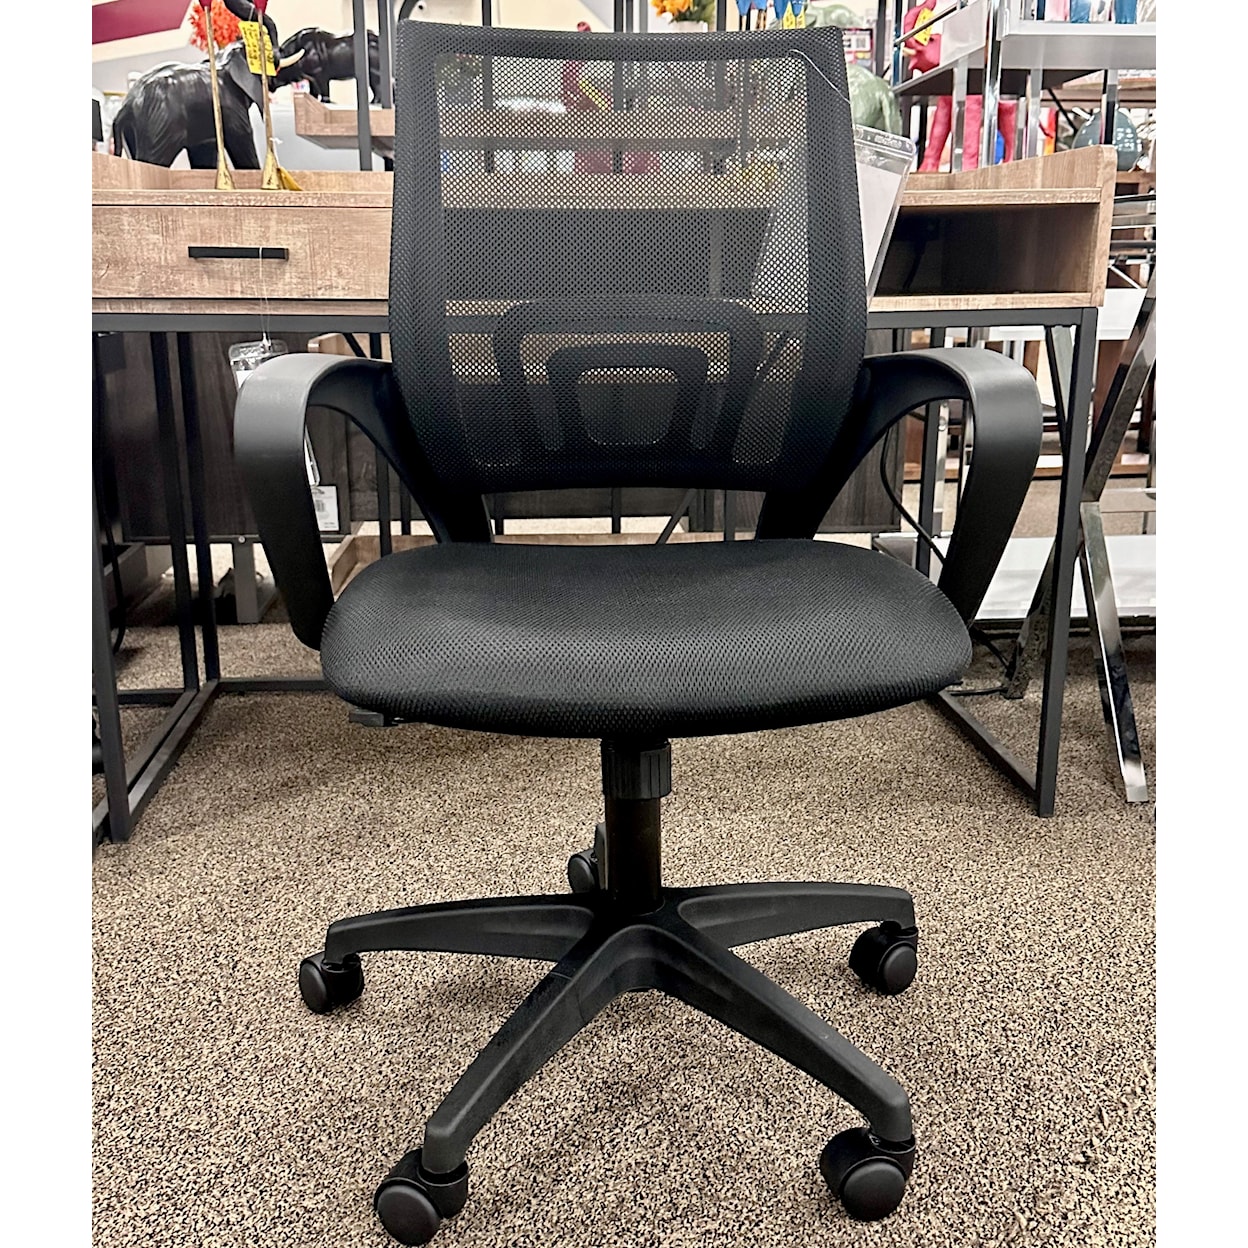 Furniture of America Office Chair ERGONOMIC BLACK DESK CHAIR |